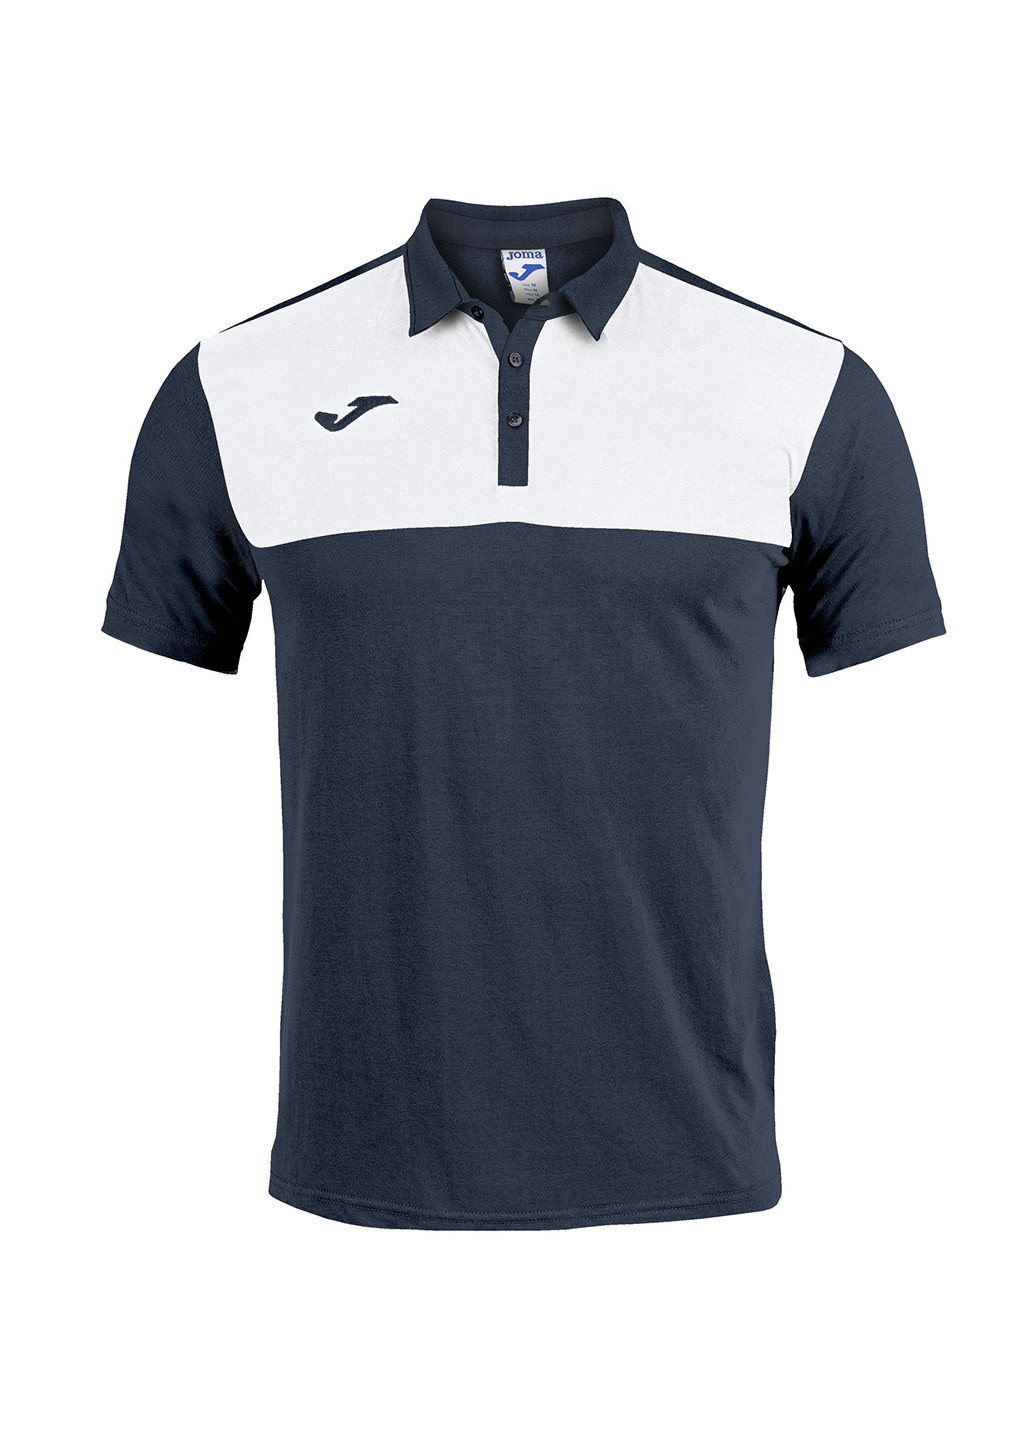 Темно-синяя футболка-поло для мужчин Joma с логотипом